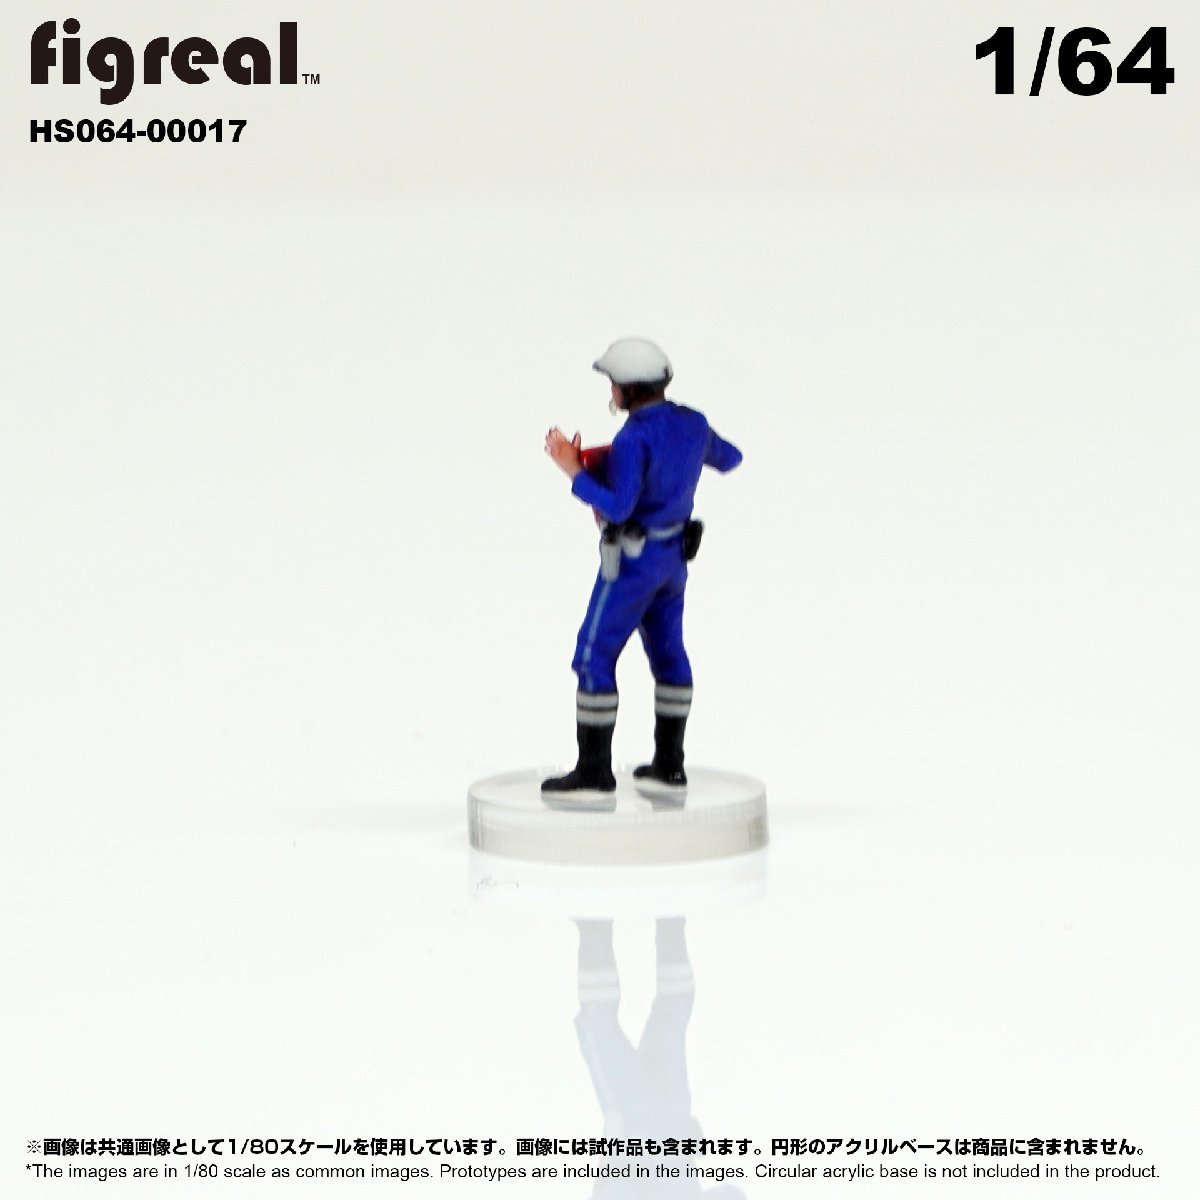 HS064-00017 figreal 日本交通機動隊 1/64 高精細フィギュアの画像4